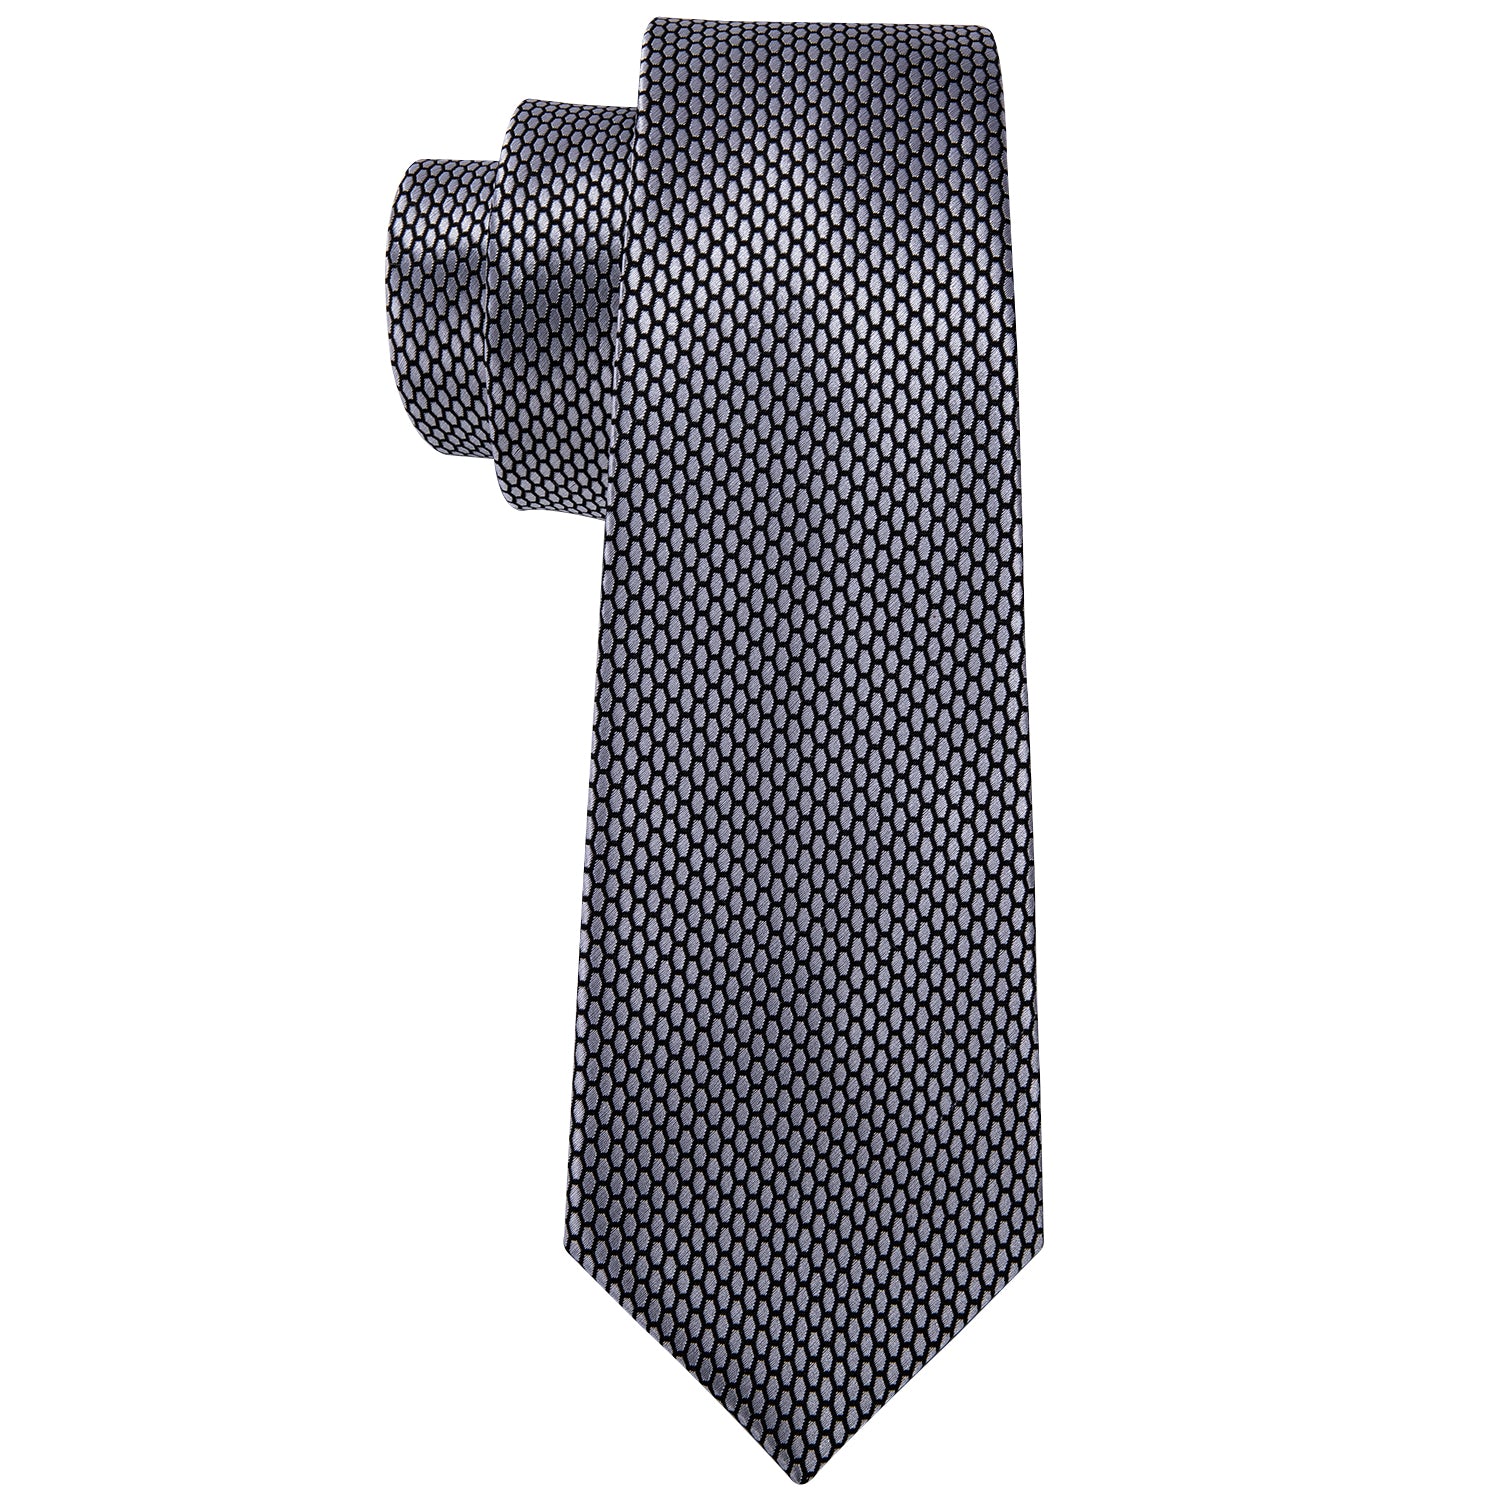 Barry.wang Grey Tie Geometric Plaid Men's Tie Pocket Square Cufflinks Set